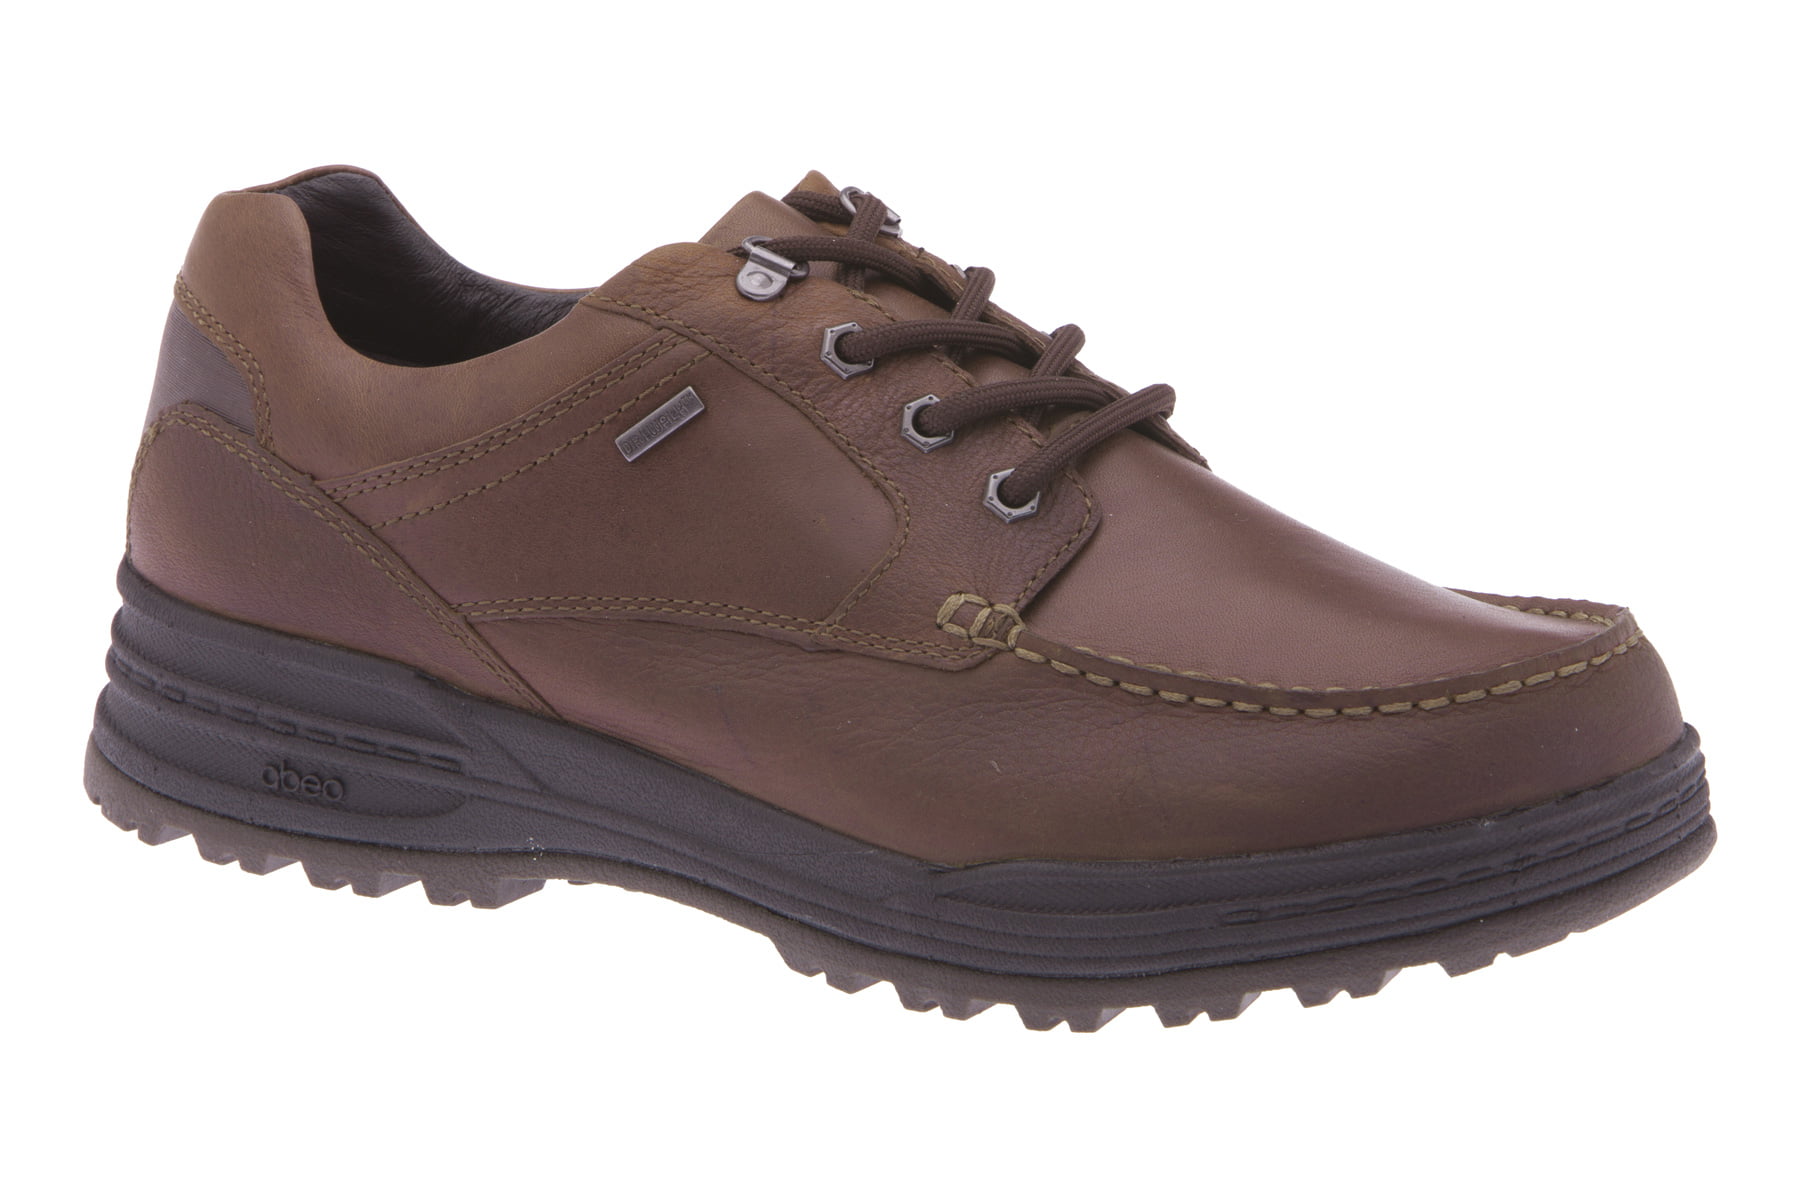 ABEO Footwear - ABEO Men's Rayburn - Casual Shoes - Walmart.com ...